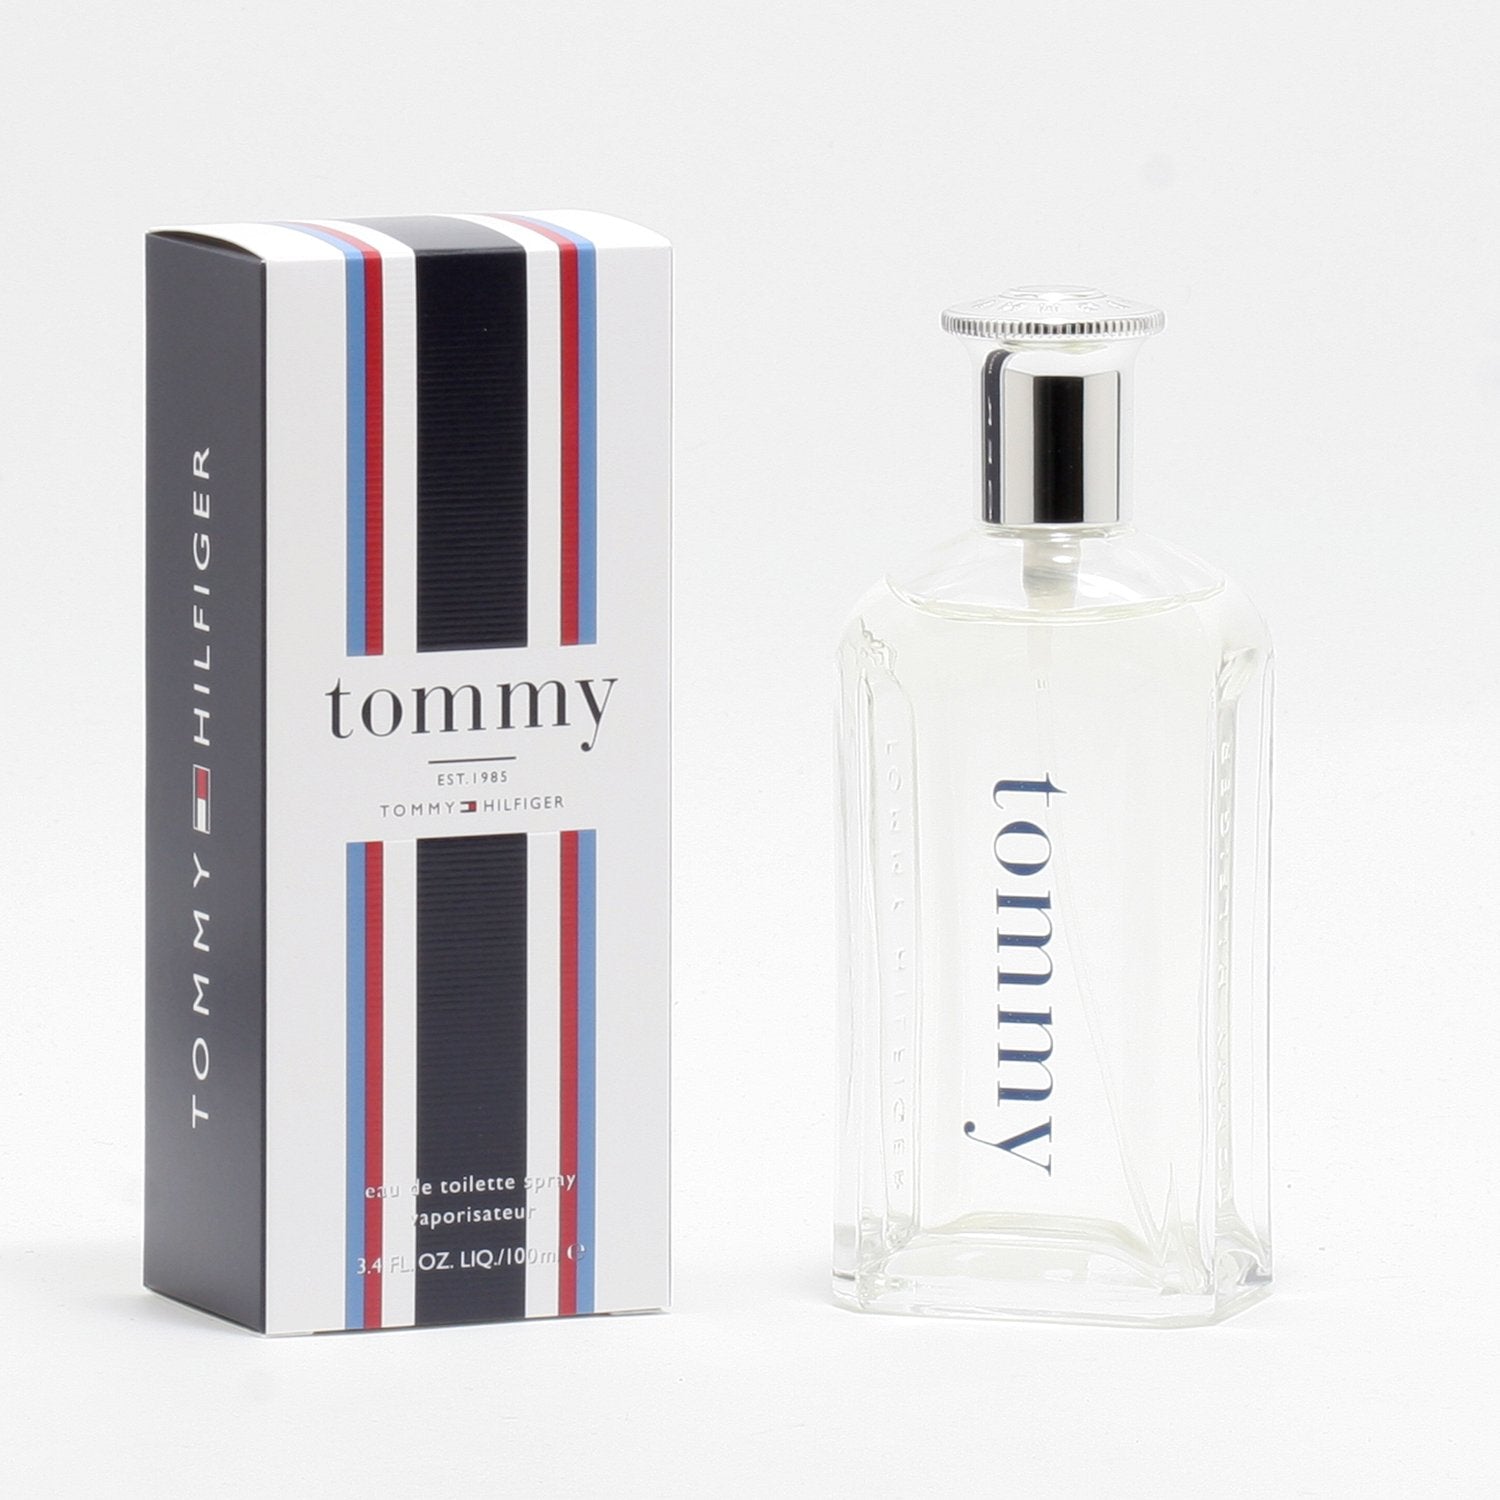 FOR MEN BY TOMMY - EAU DE TOILETTE SPRAY, 3.4 OZ – Fragrance